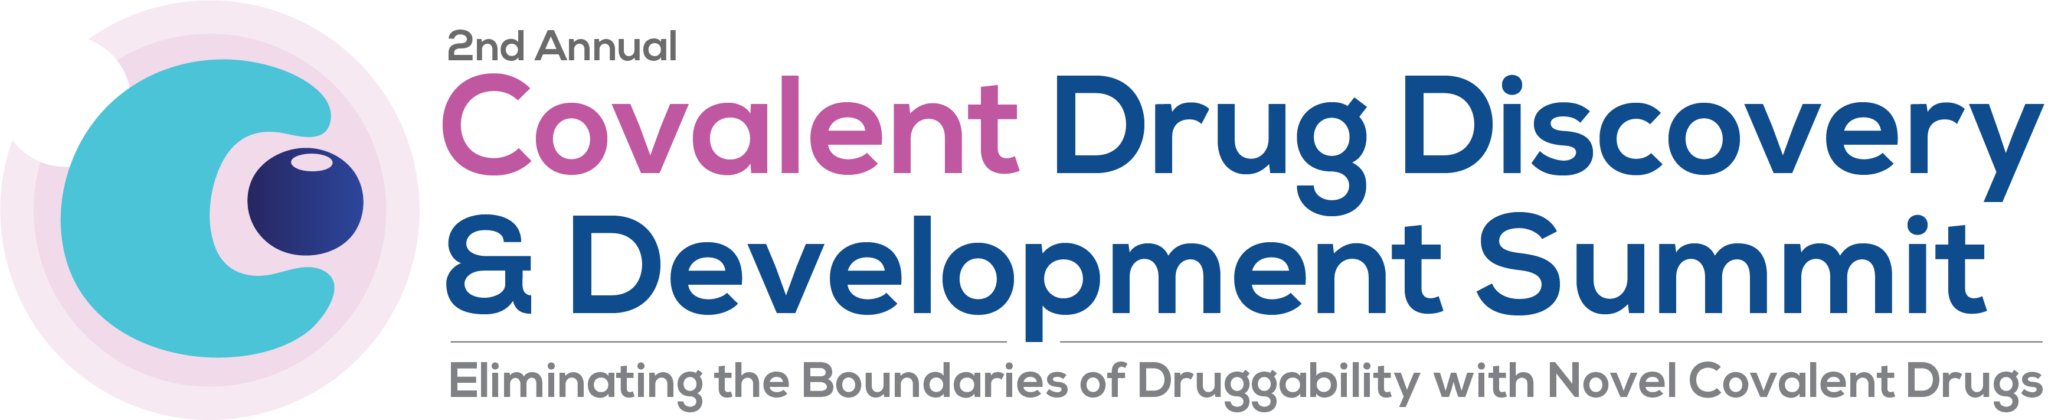 Covalent Drug Discovery Development